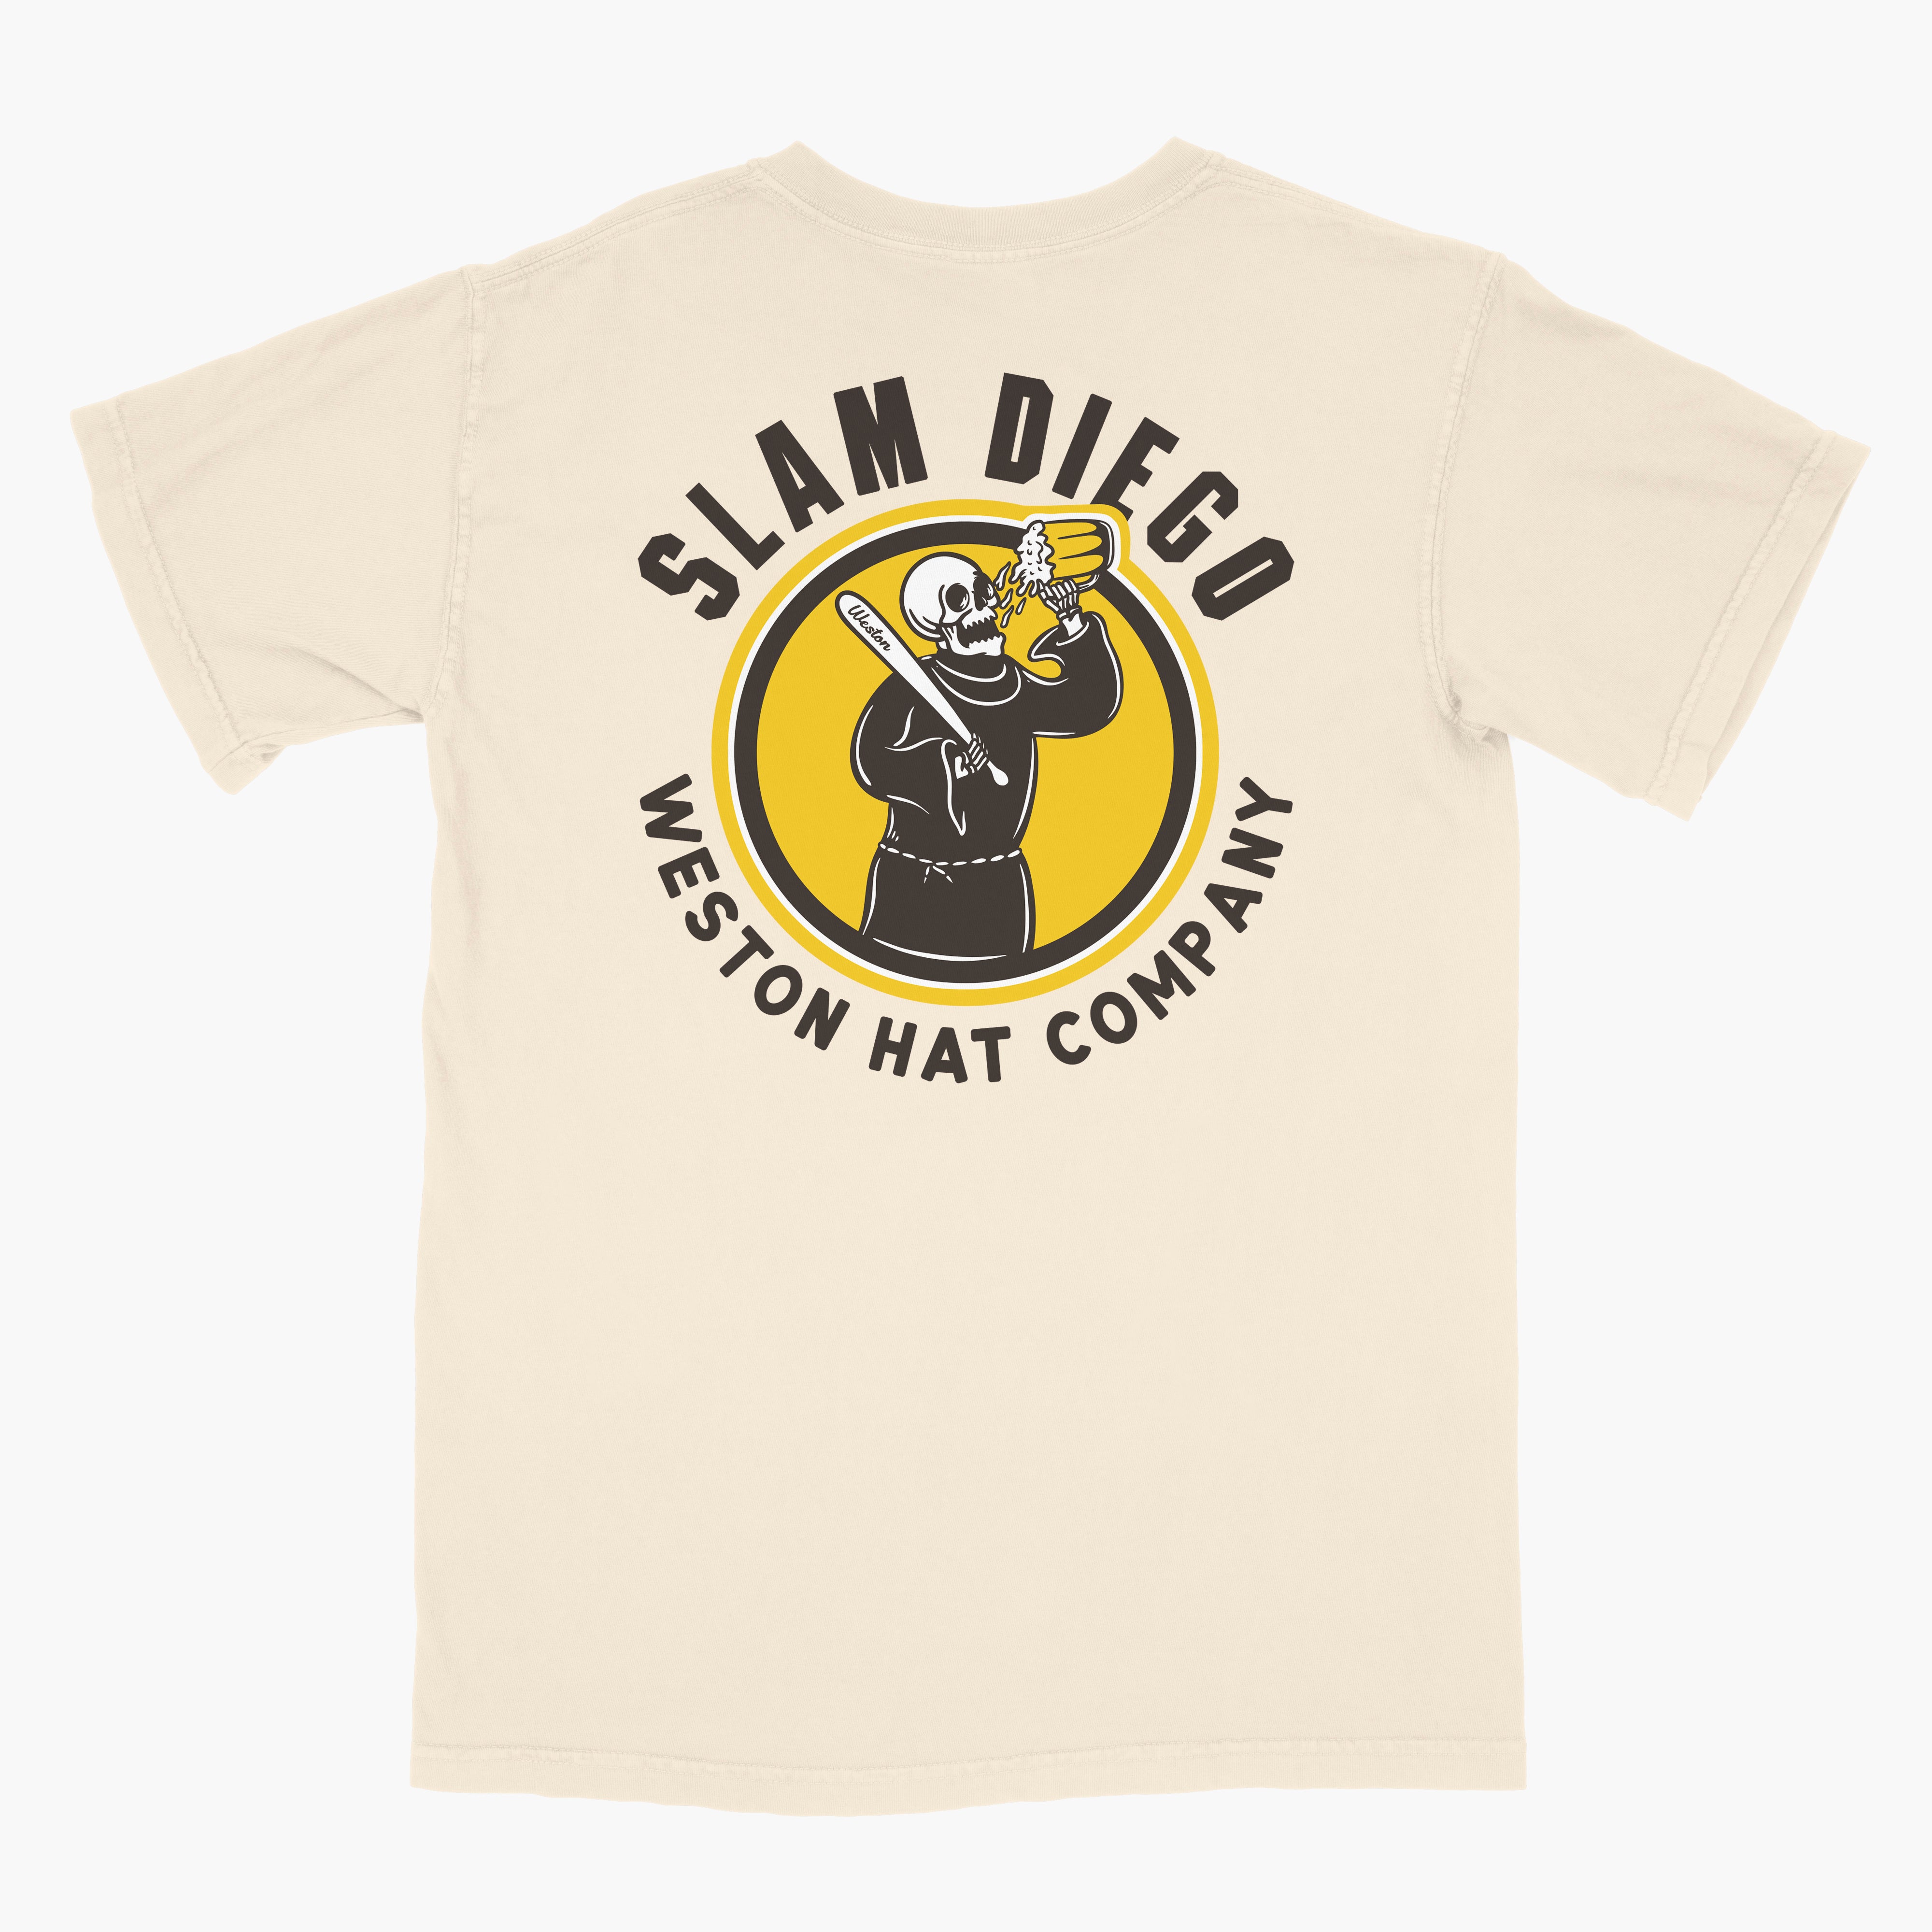 Season's Greetings From Slam Diego Shirt - Skullridding